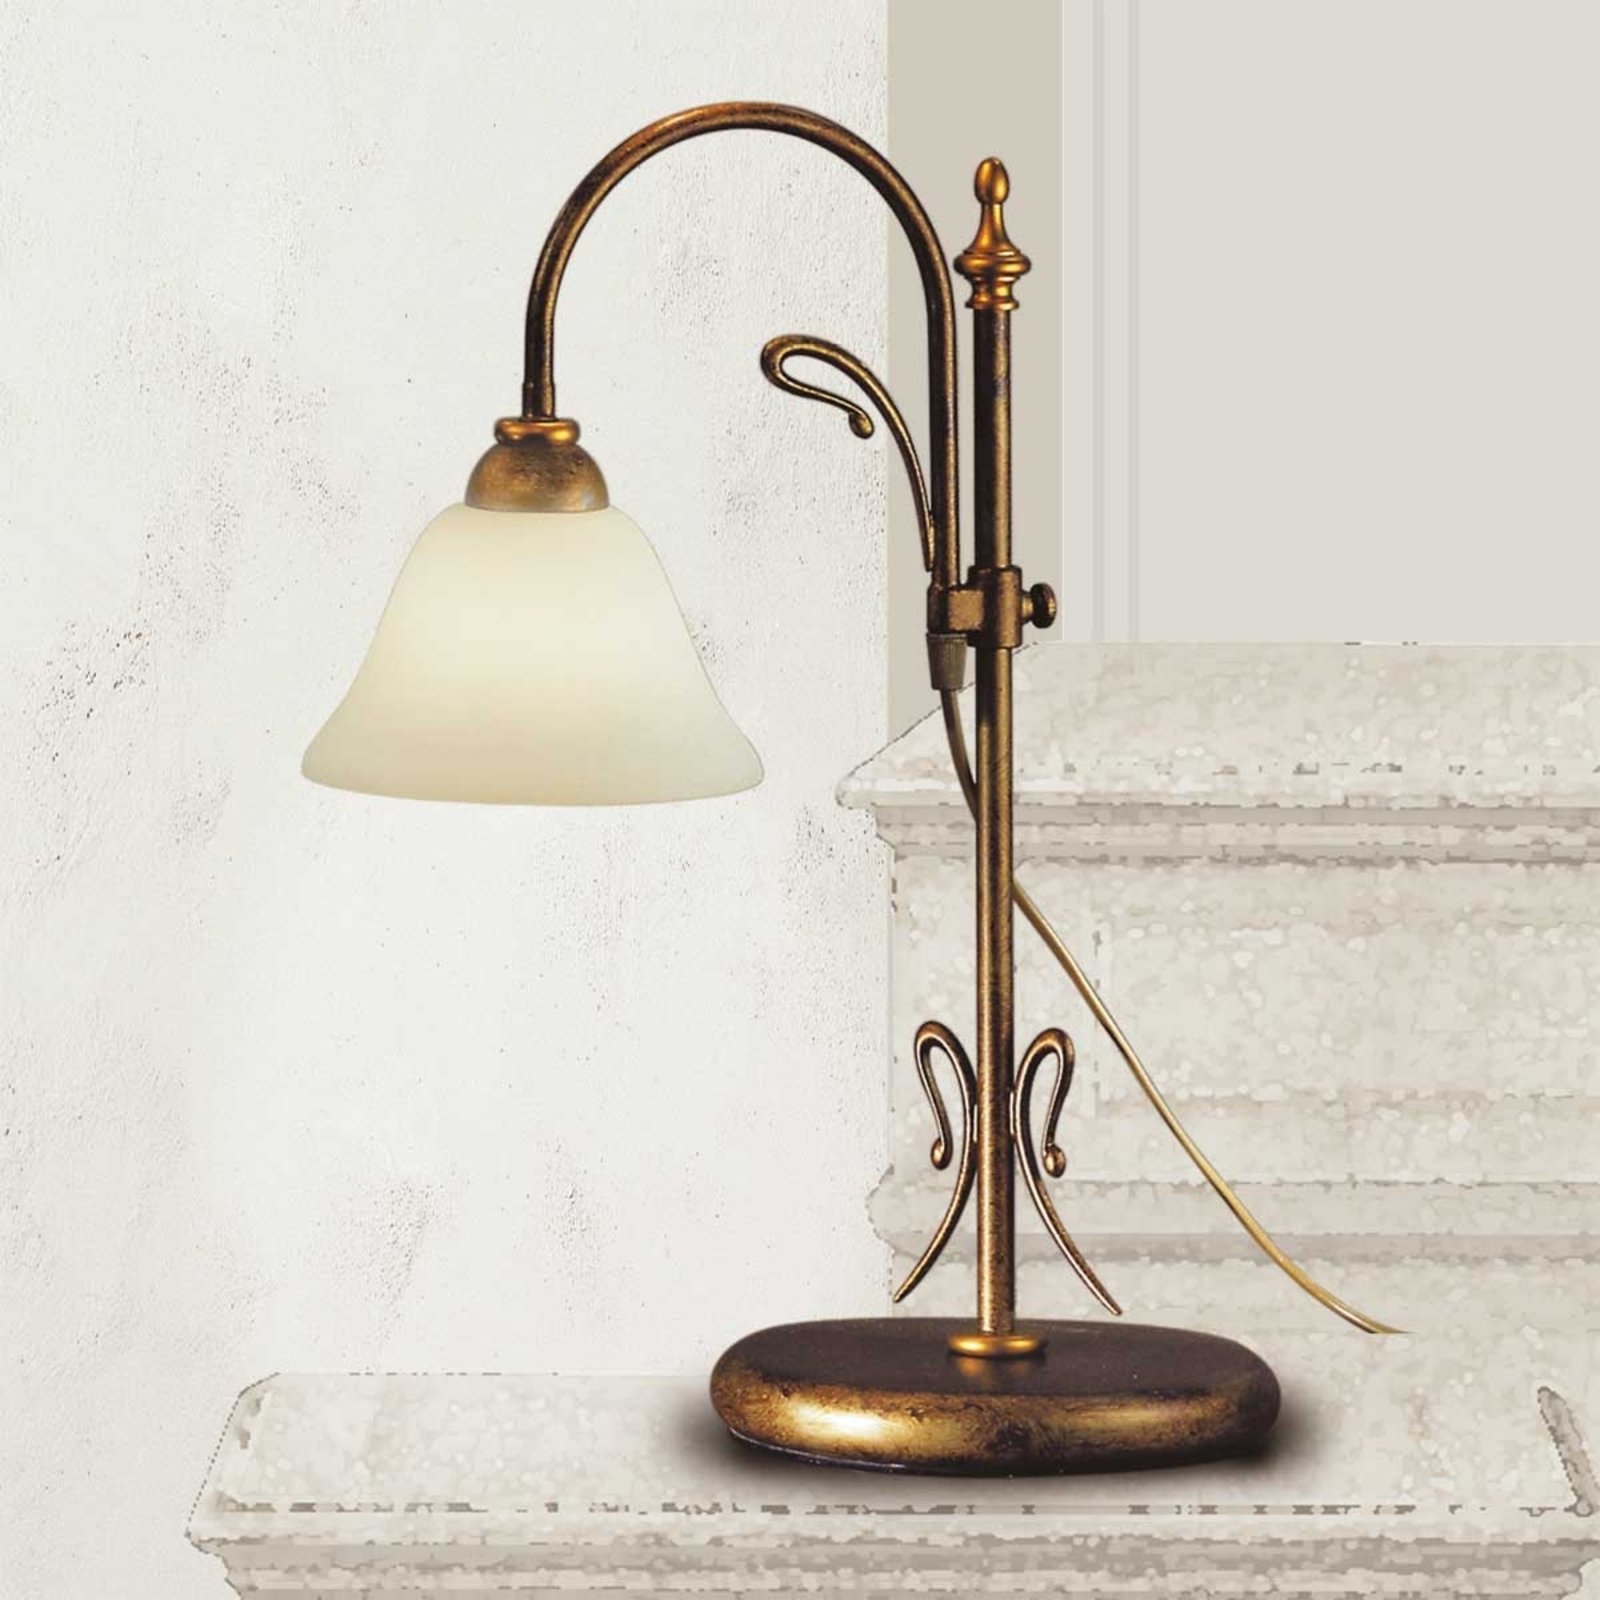 Antique-looking table lamp Antonio